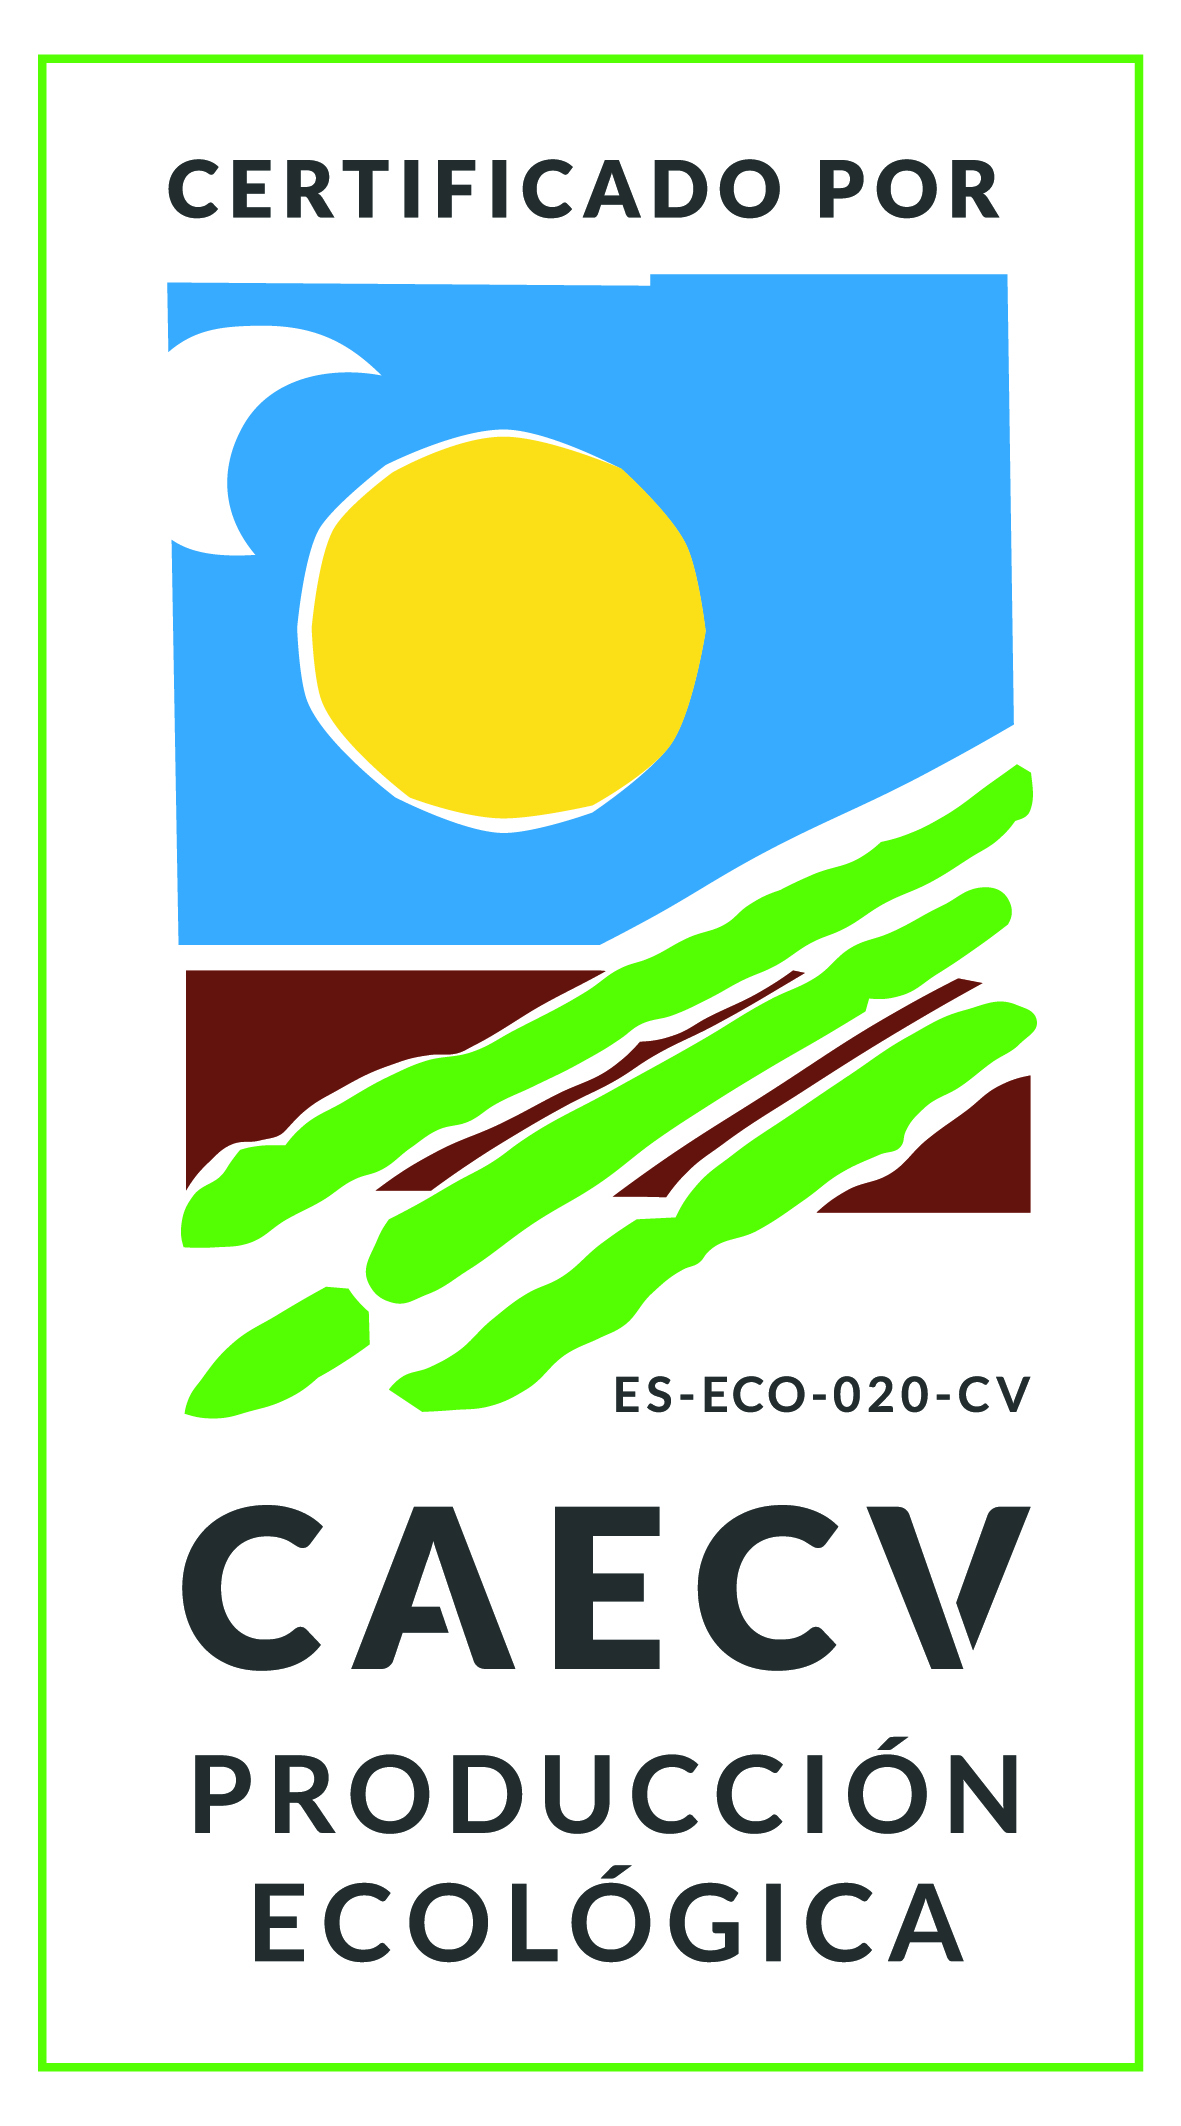 CAECV-Sello-CertificacionCMYK(CS)